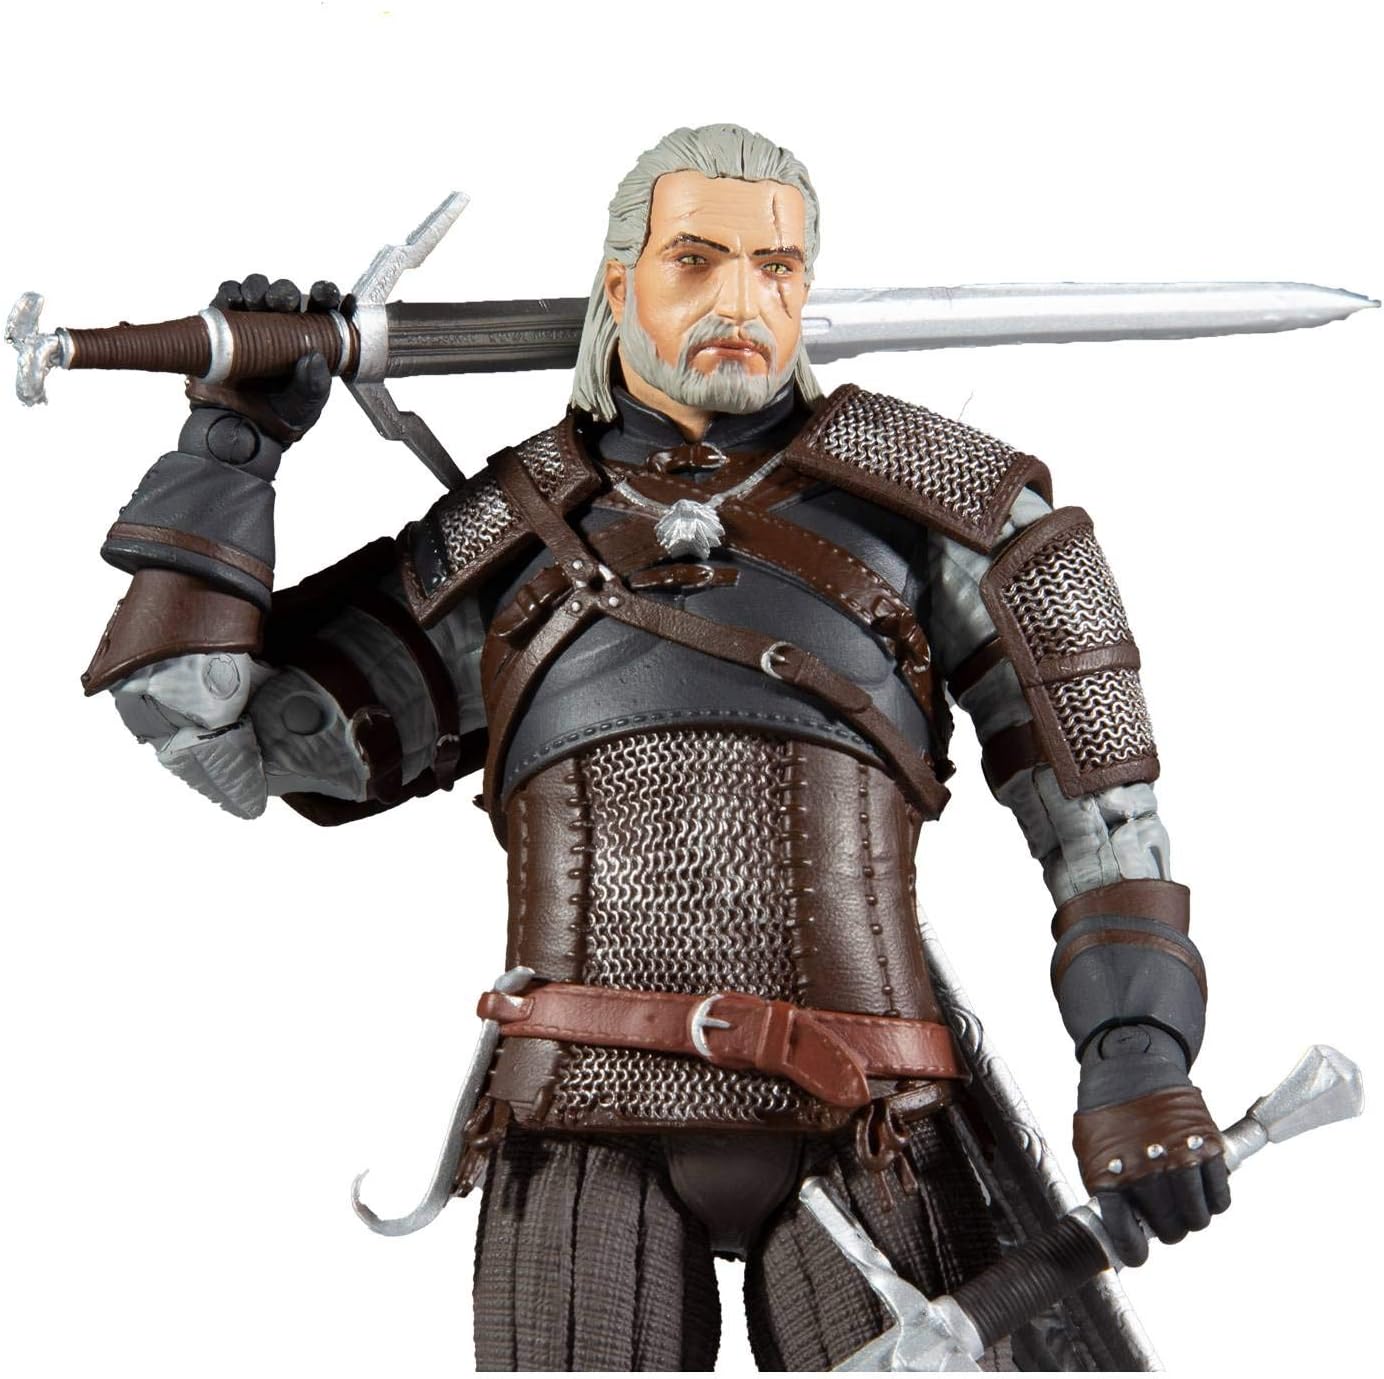 McFarlane - Witcher Gaming 7 Figures 1 - Geralt of Rivia, Brown